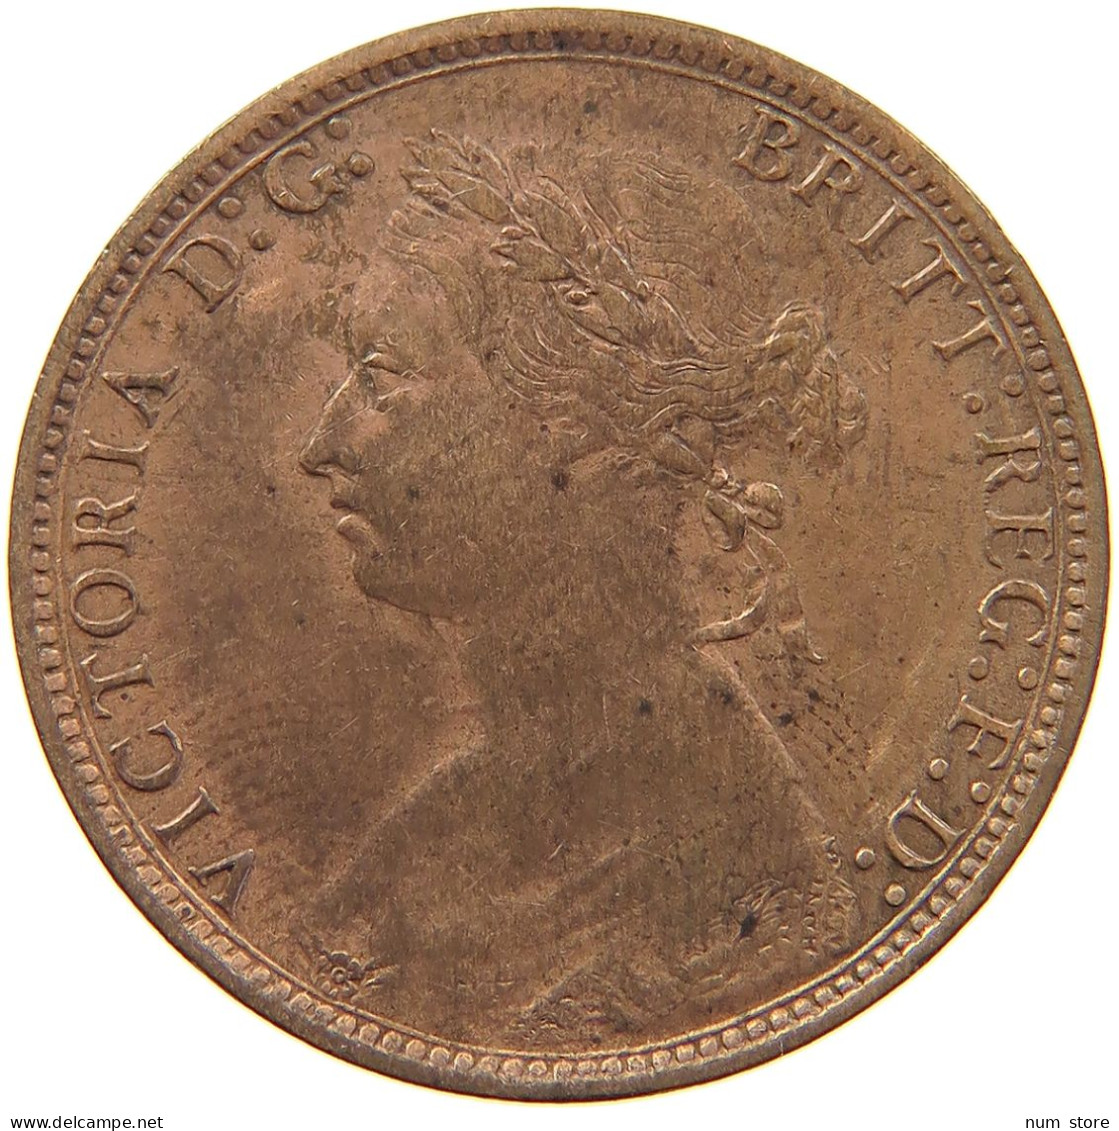 GREAT BRITAIN HALFPENNY 1876 H Victoria 1837-1901 #s021 0319 - C. 1/2 Penny